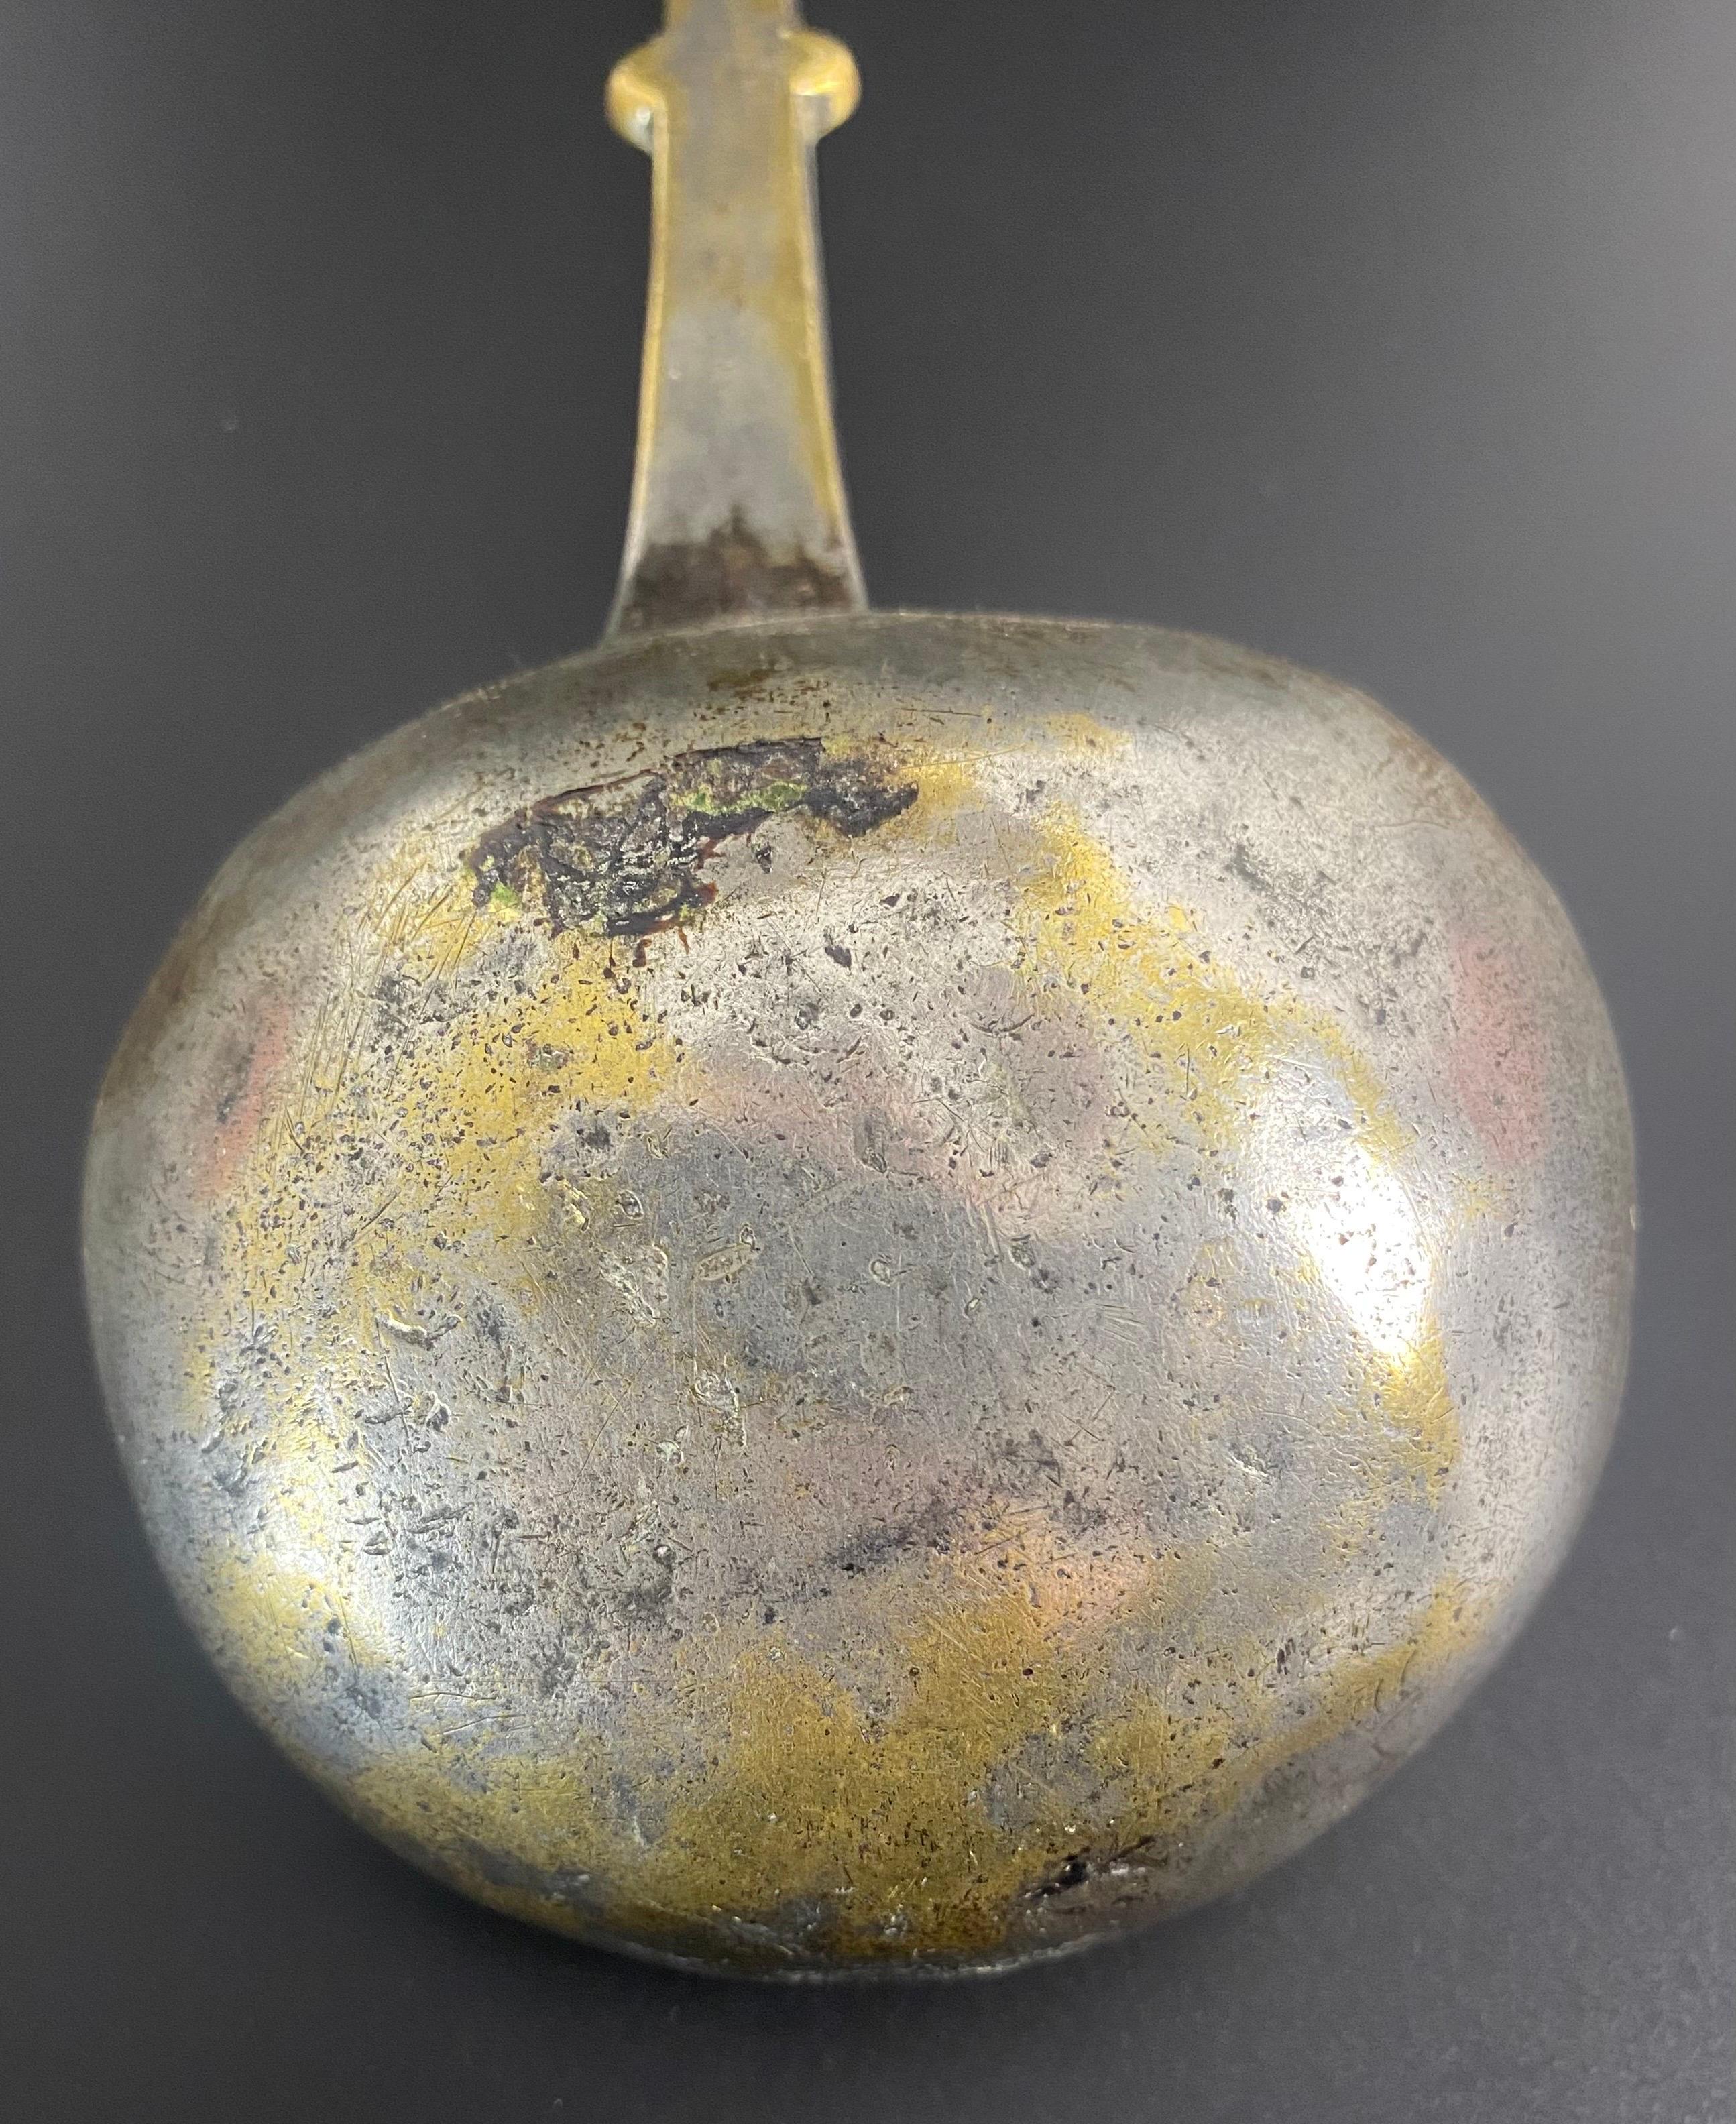 French Haute Epoque bronze ladle - 17th century - France For Sale